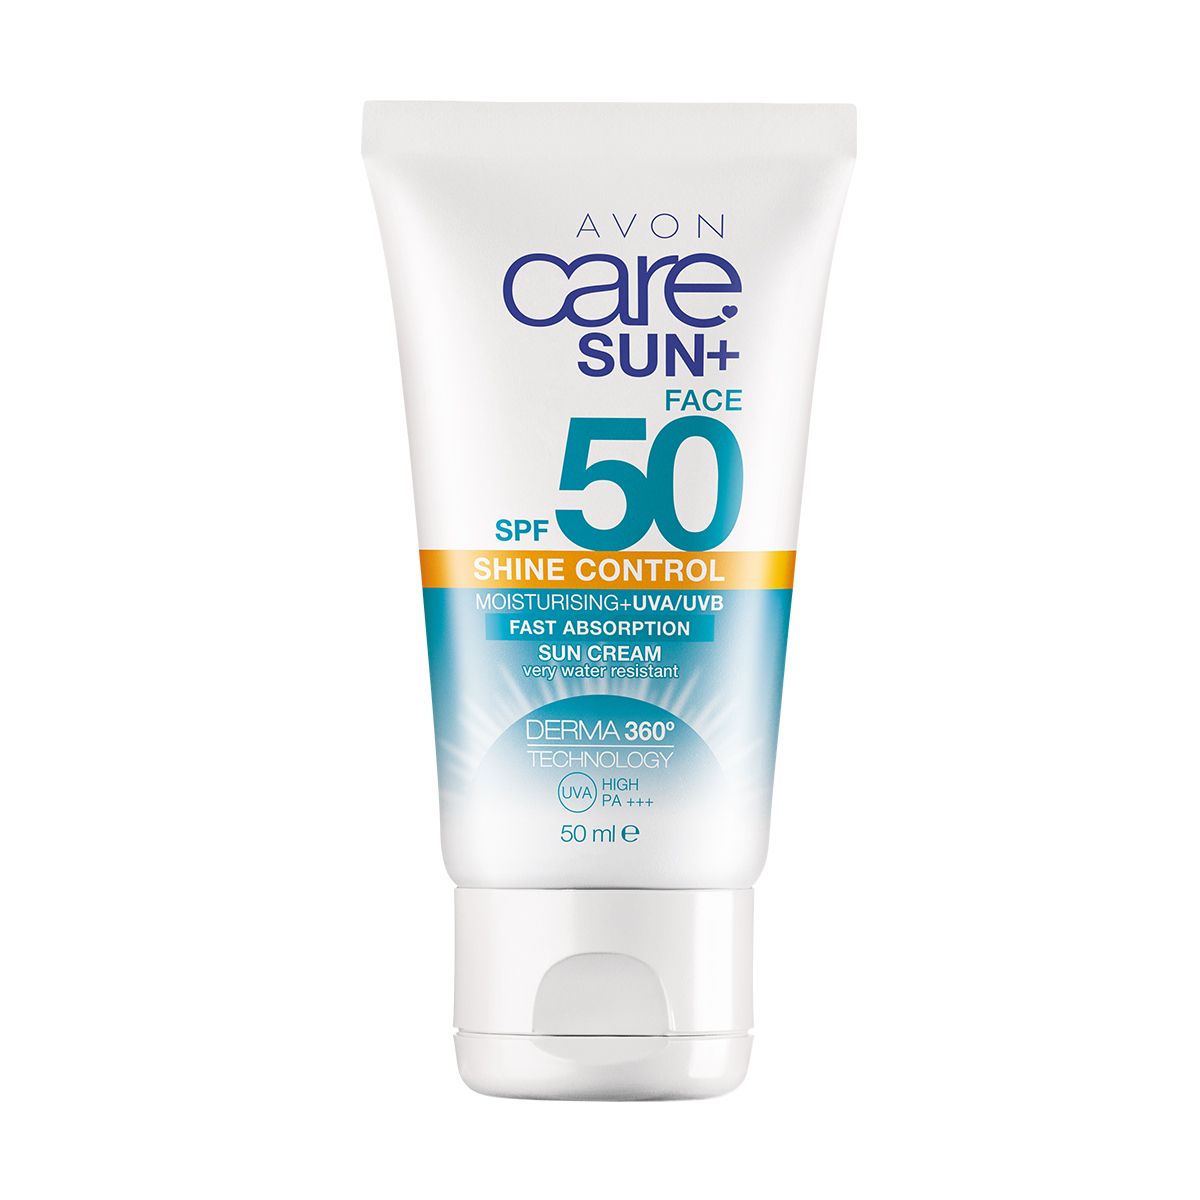 Avon Care Sun+ Creme de Rosto Hidratante Proteção